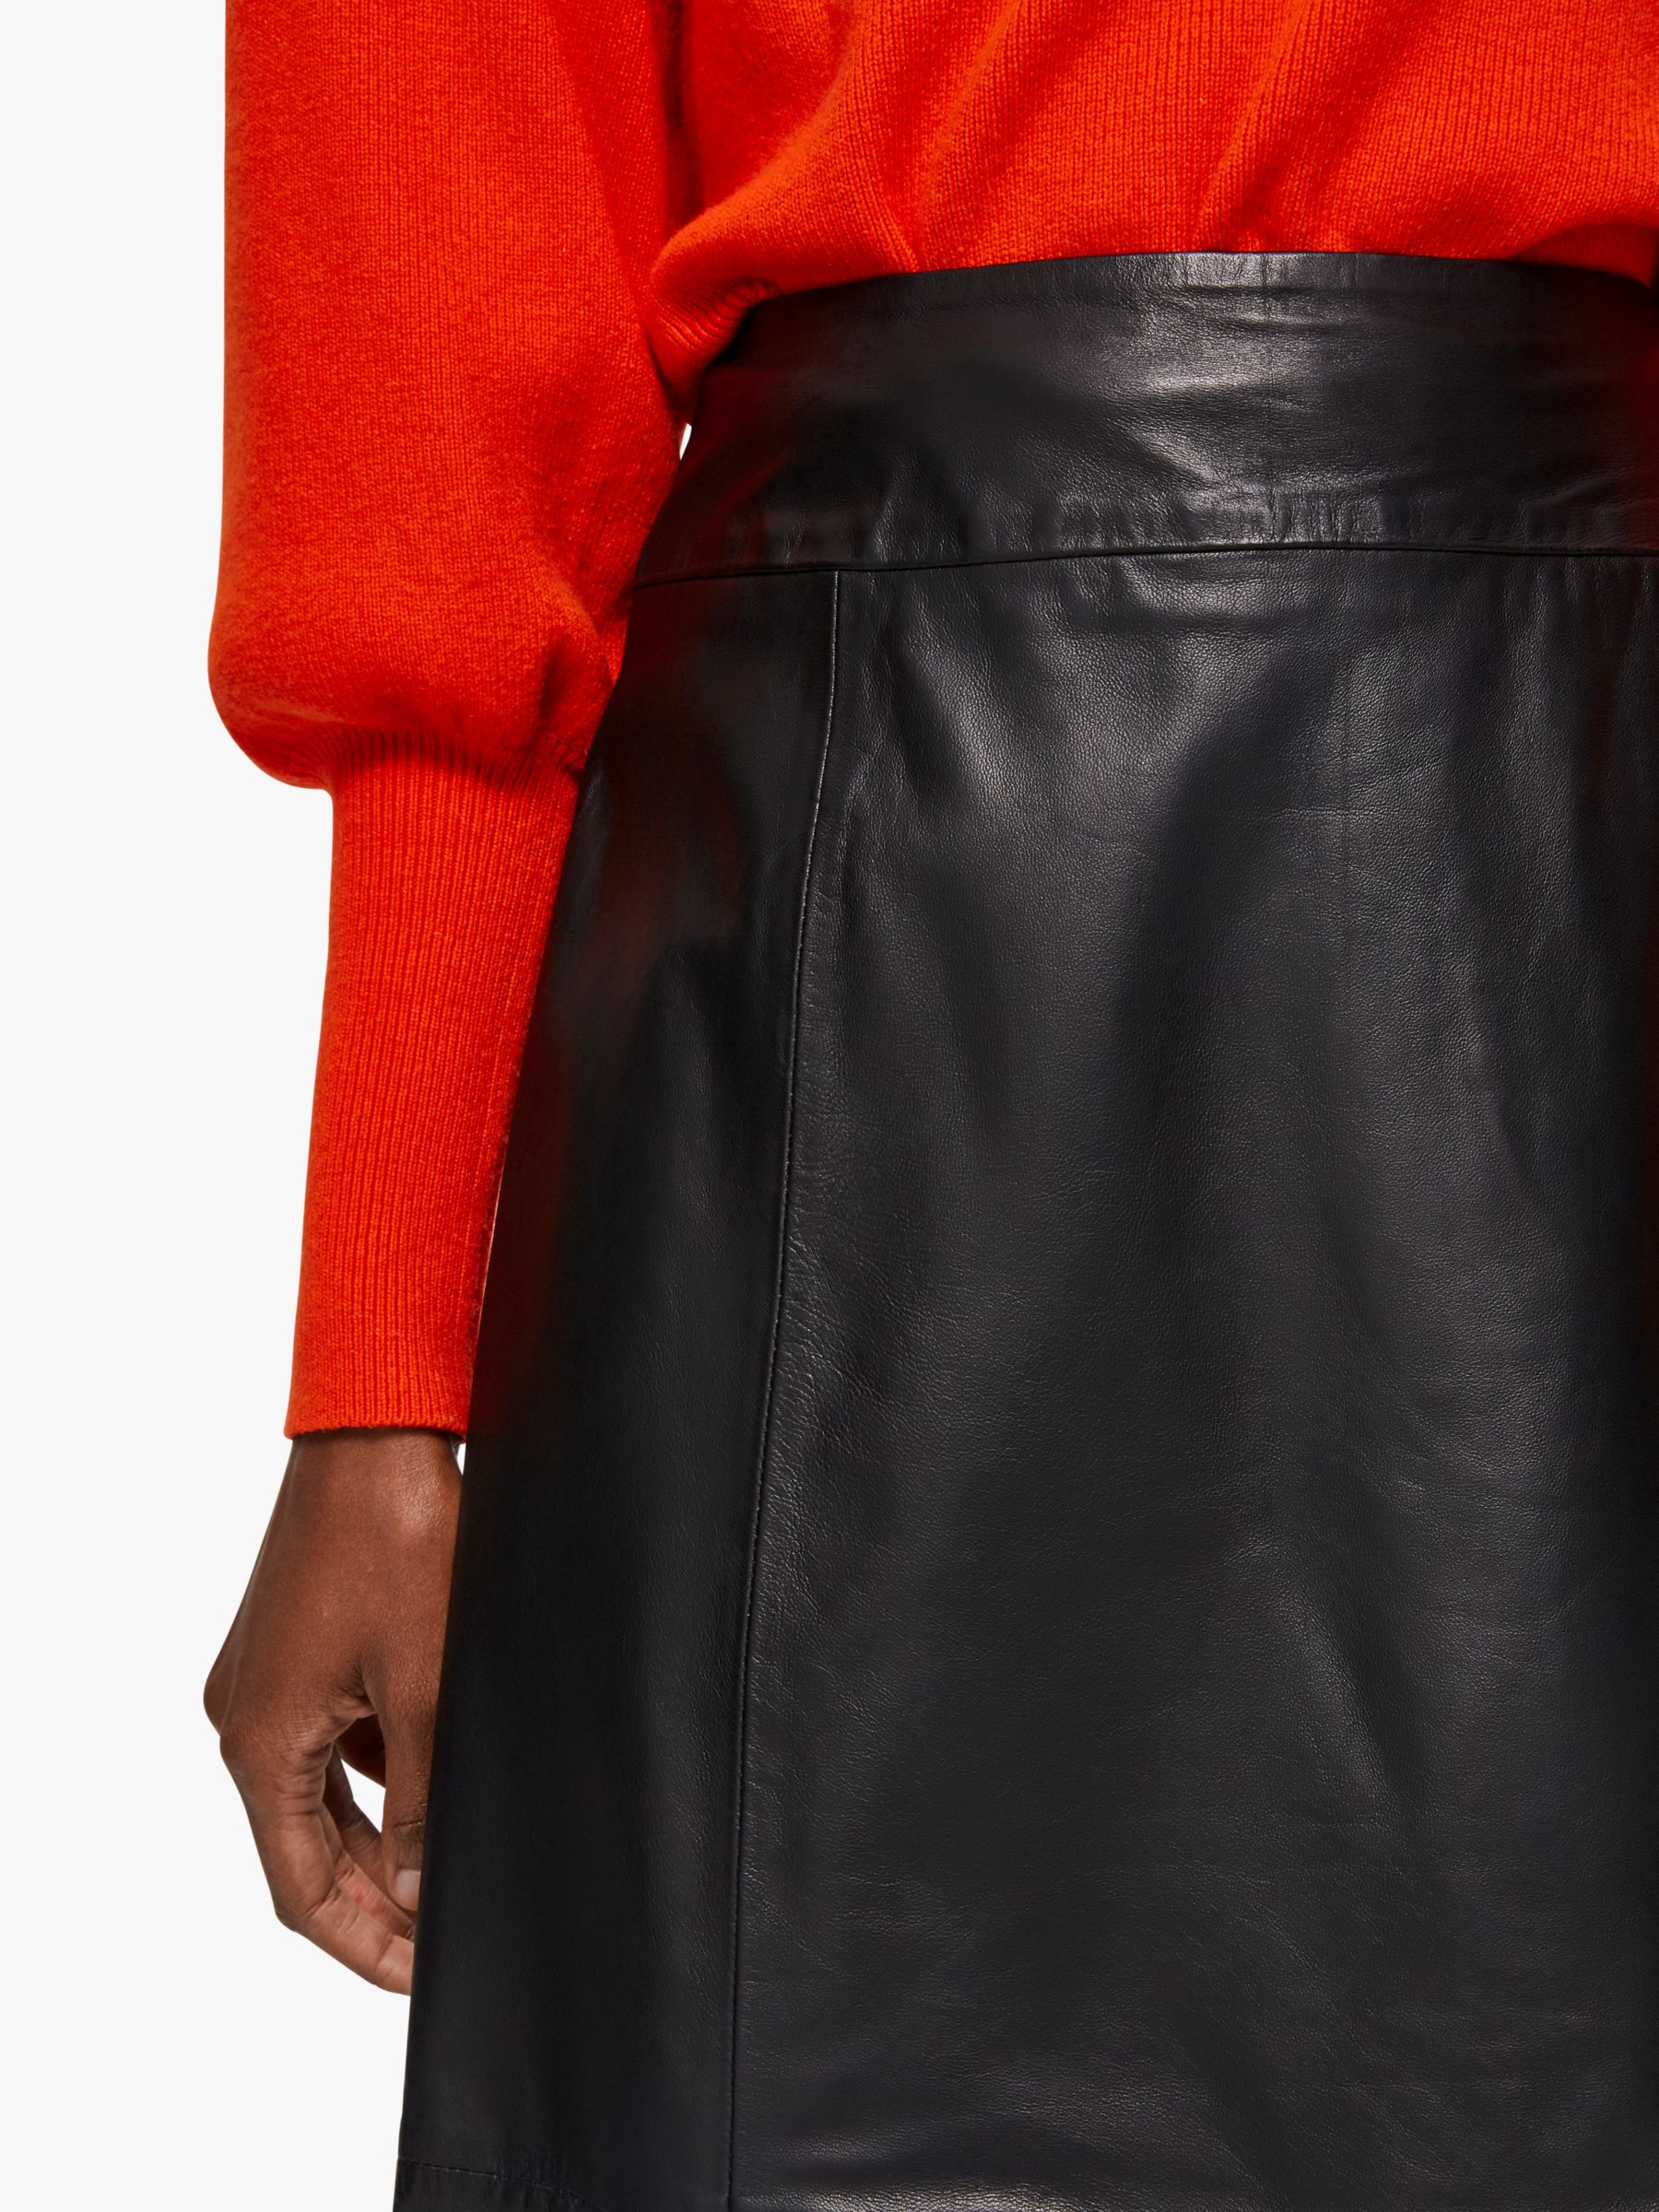 Selected Femme Ardee Leather Skirt, Black